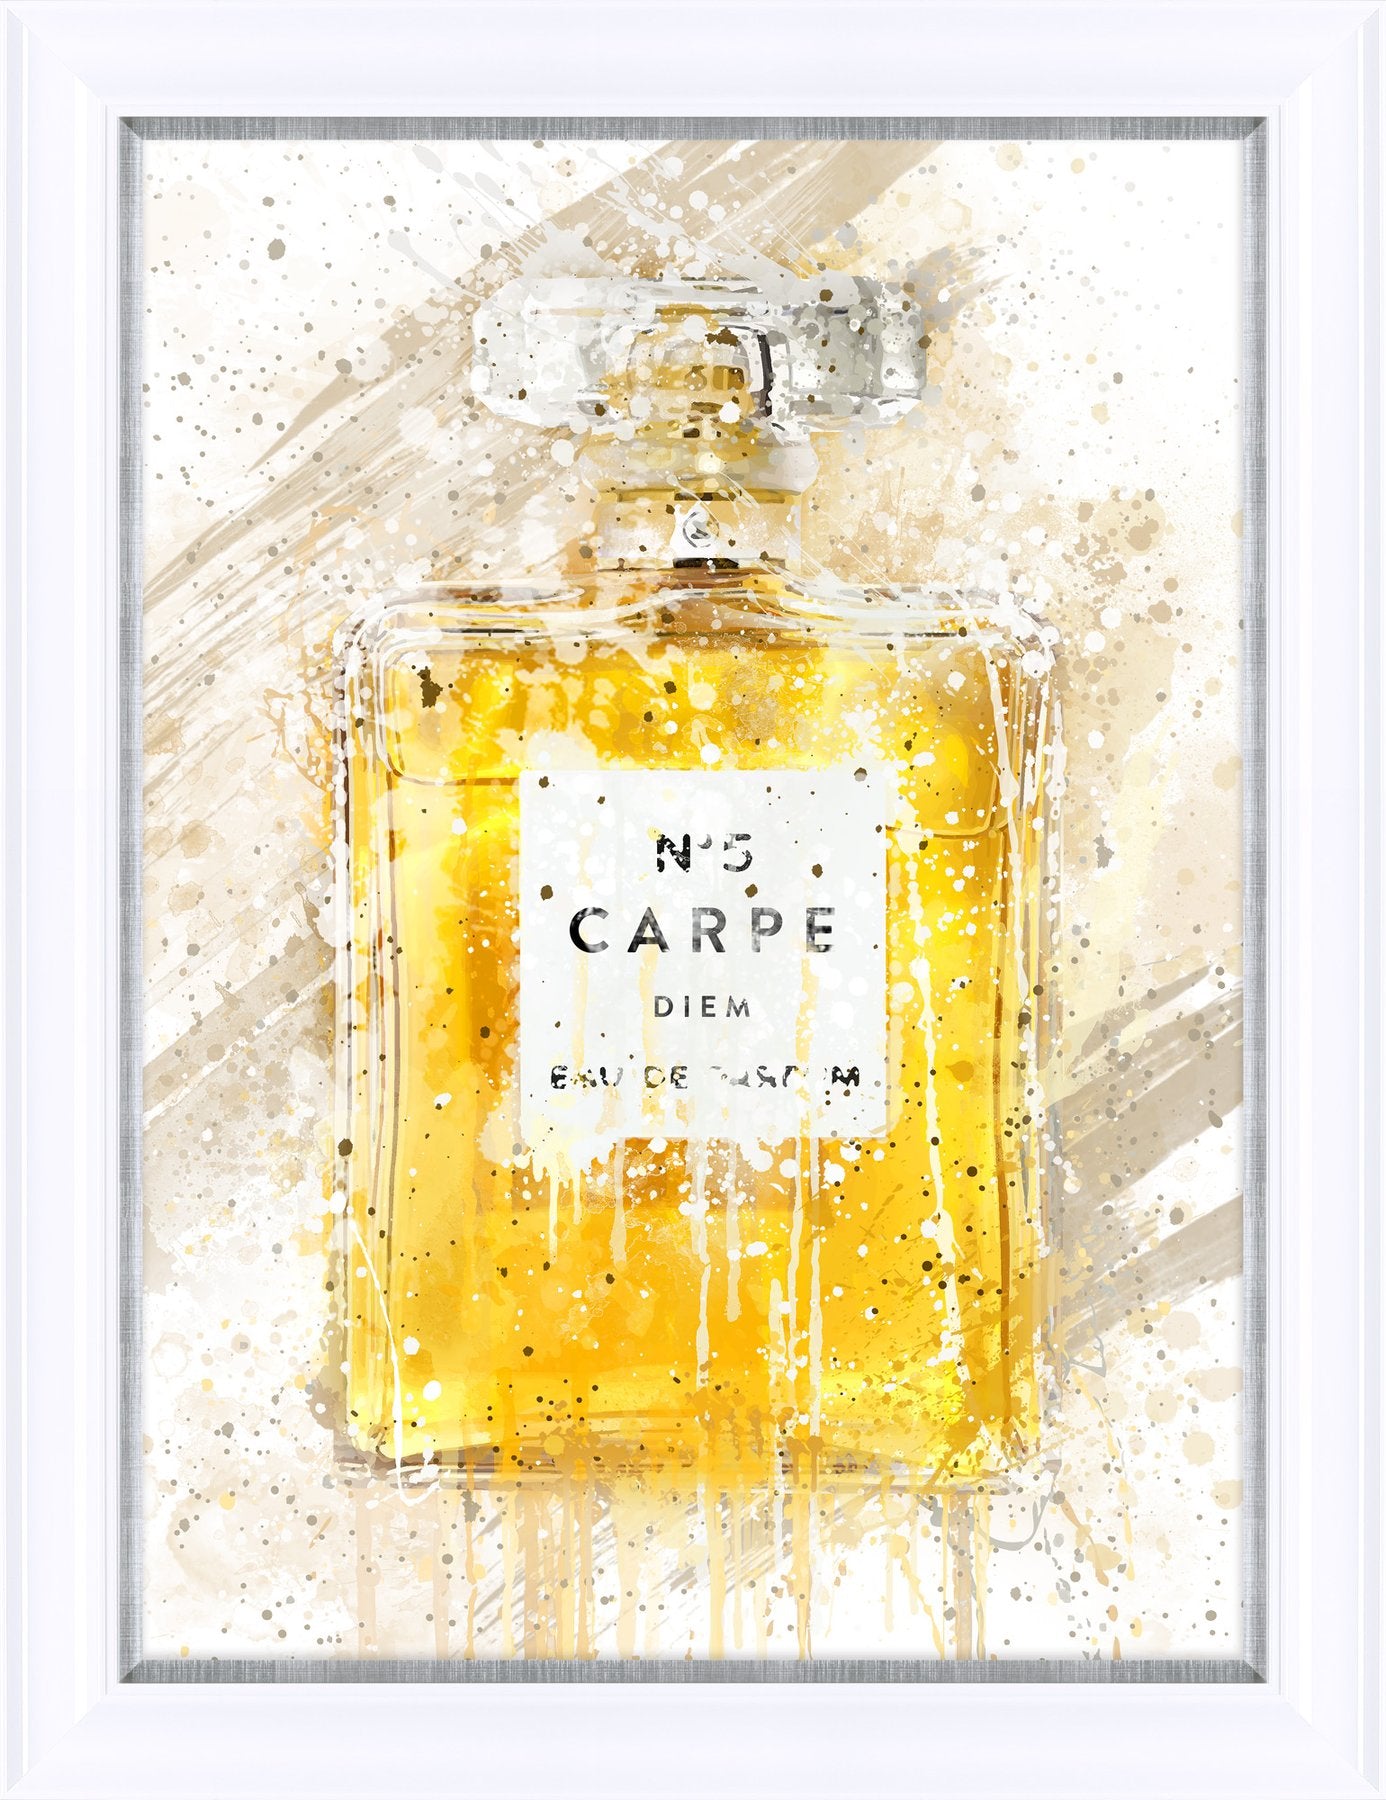 Gold Carpe Diem framed print by Pop & Toast from Artworx Gallery